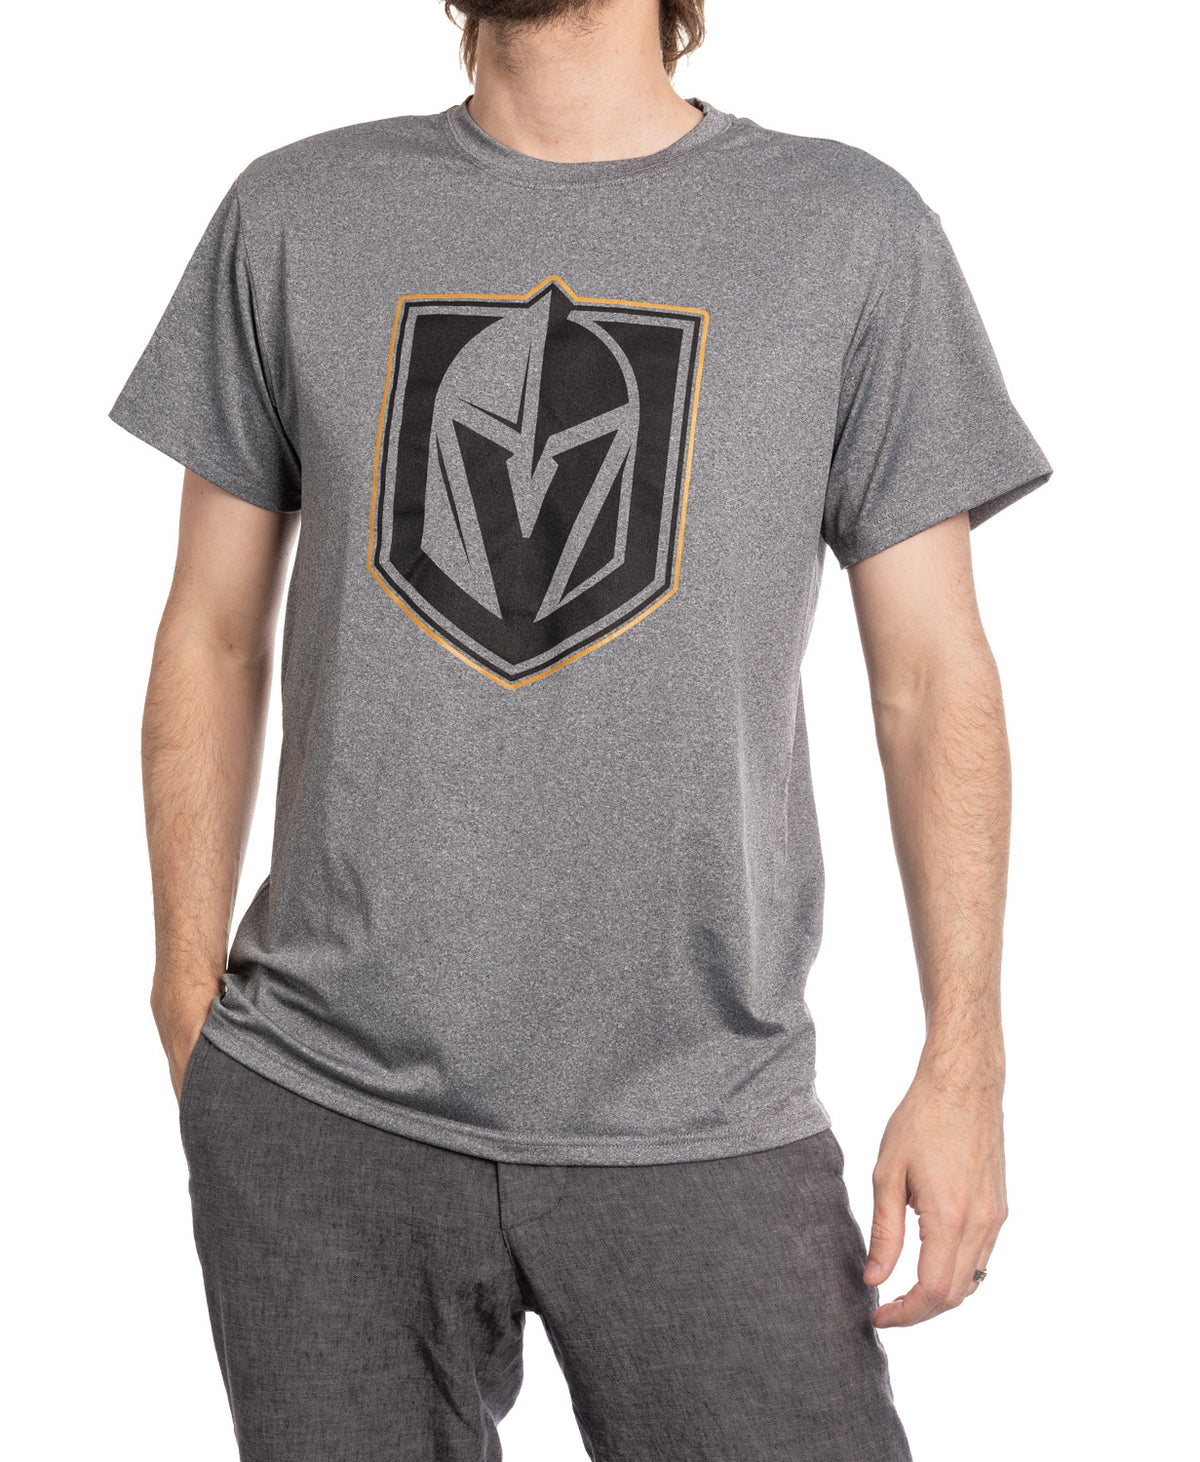 Vegas Golden Knights NHL Men's Performance Rash Guard Base Layer Moisture-Wicking T-Shirt - Grey